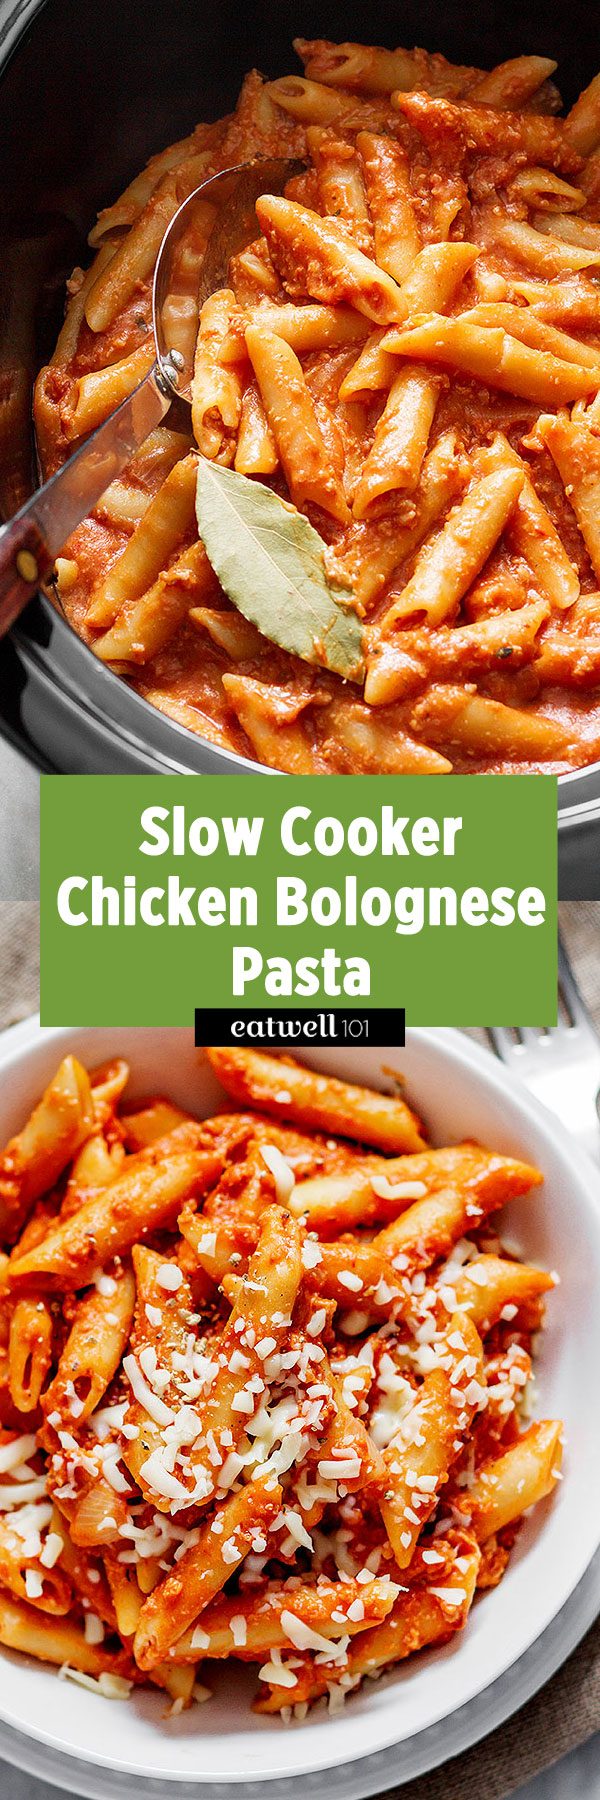 Slow Cooker Chicken Bolognese Pasta Recipe – Crock Pot Chicken Pasta ...